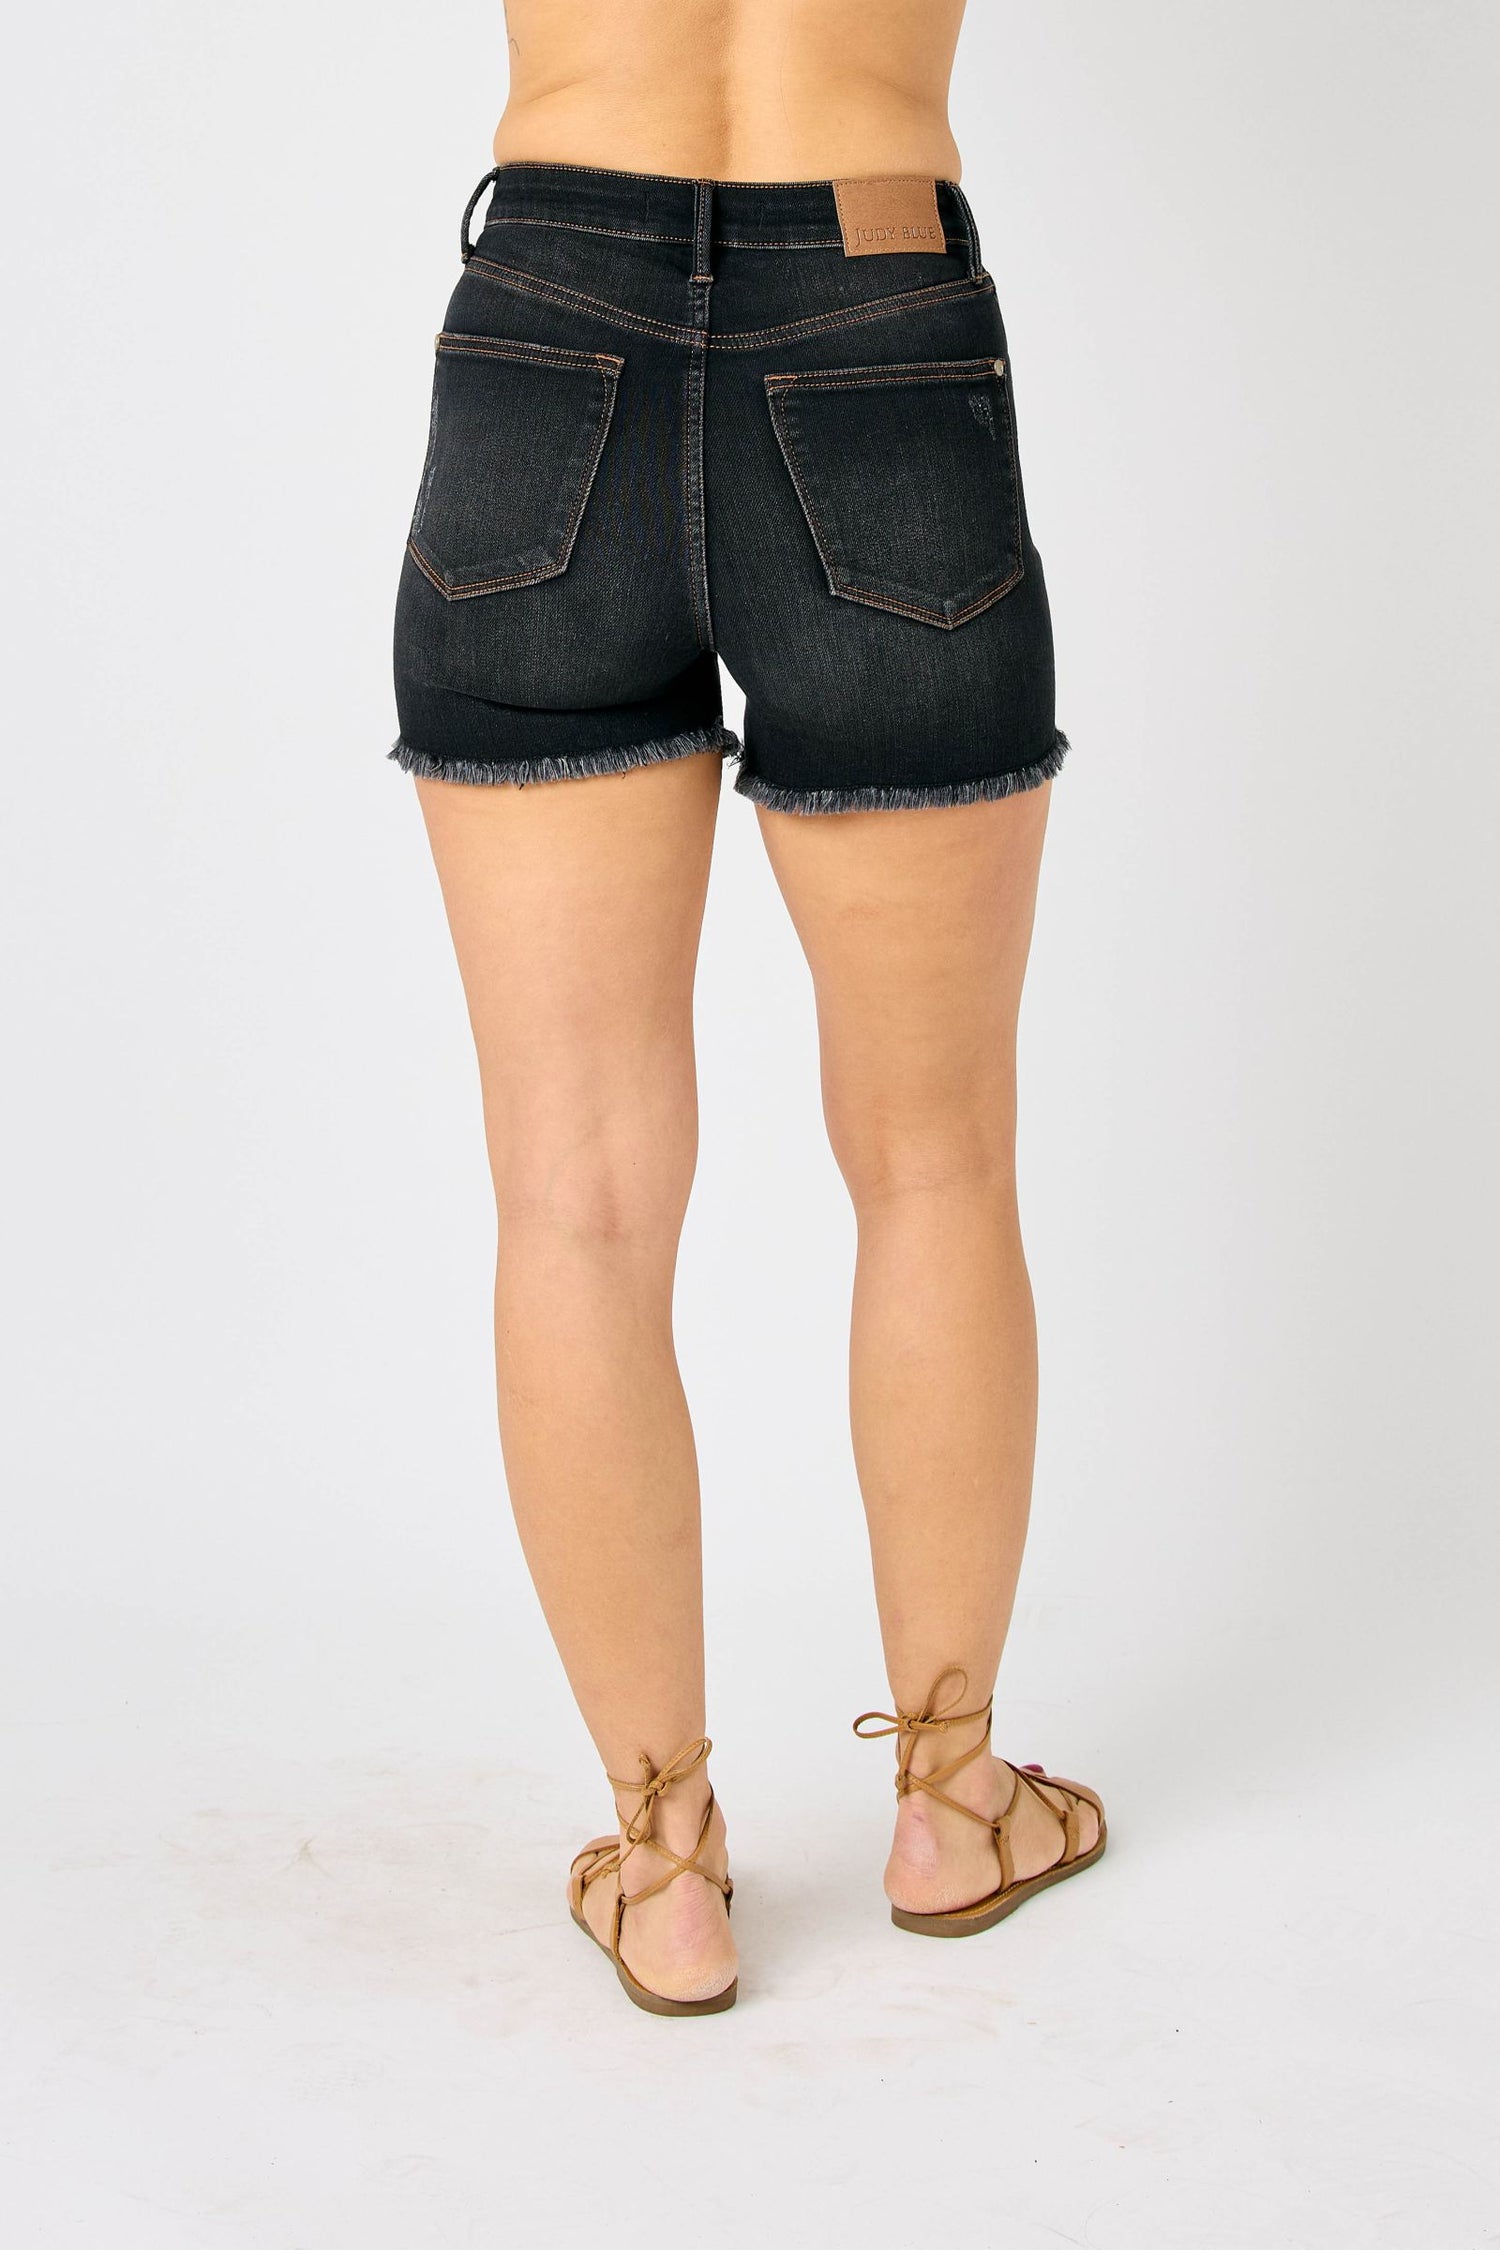 Judy Blue Black Jean Shorts